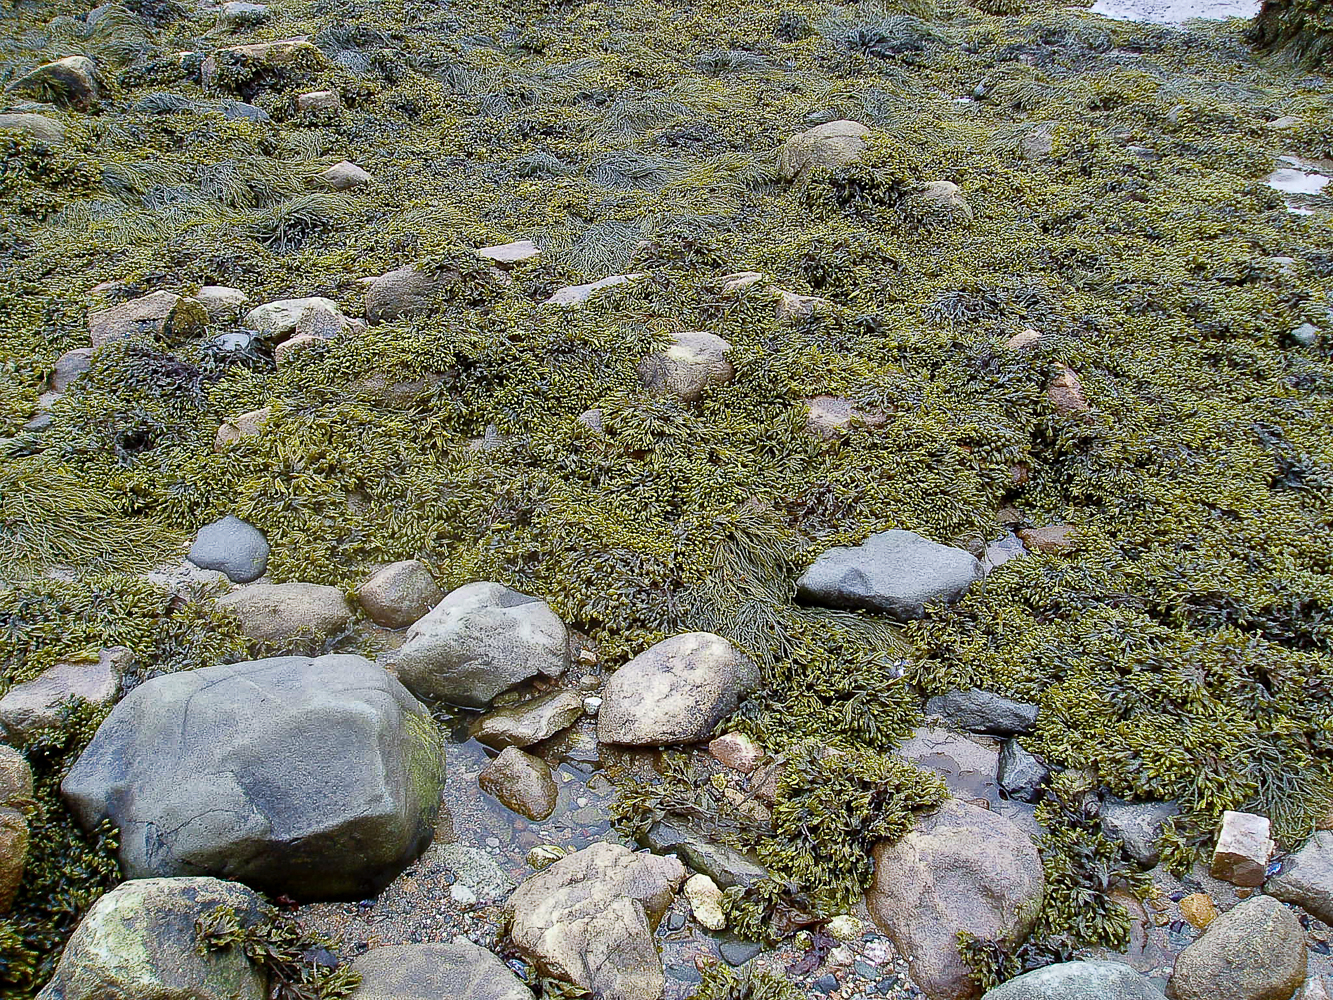 Bladderwrack (Fucus Spiralis) Grows High Up in the Intertidal Zone